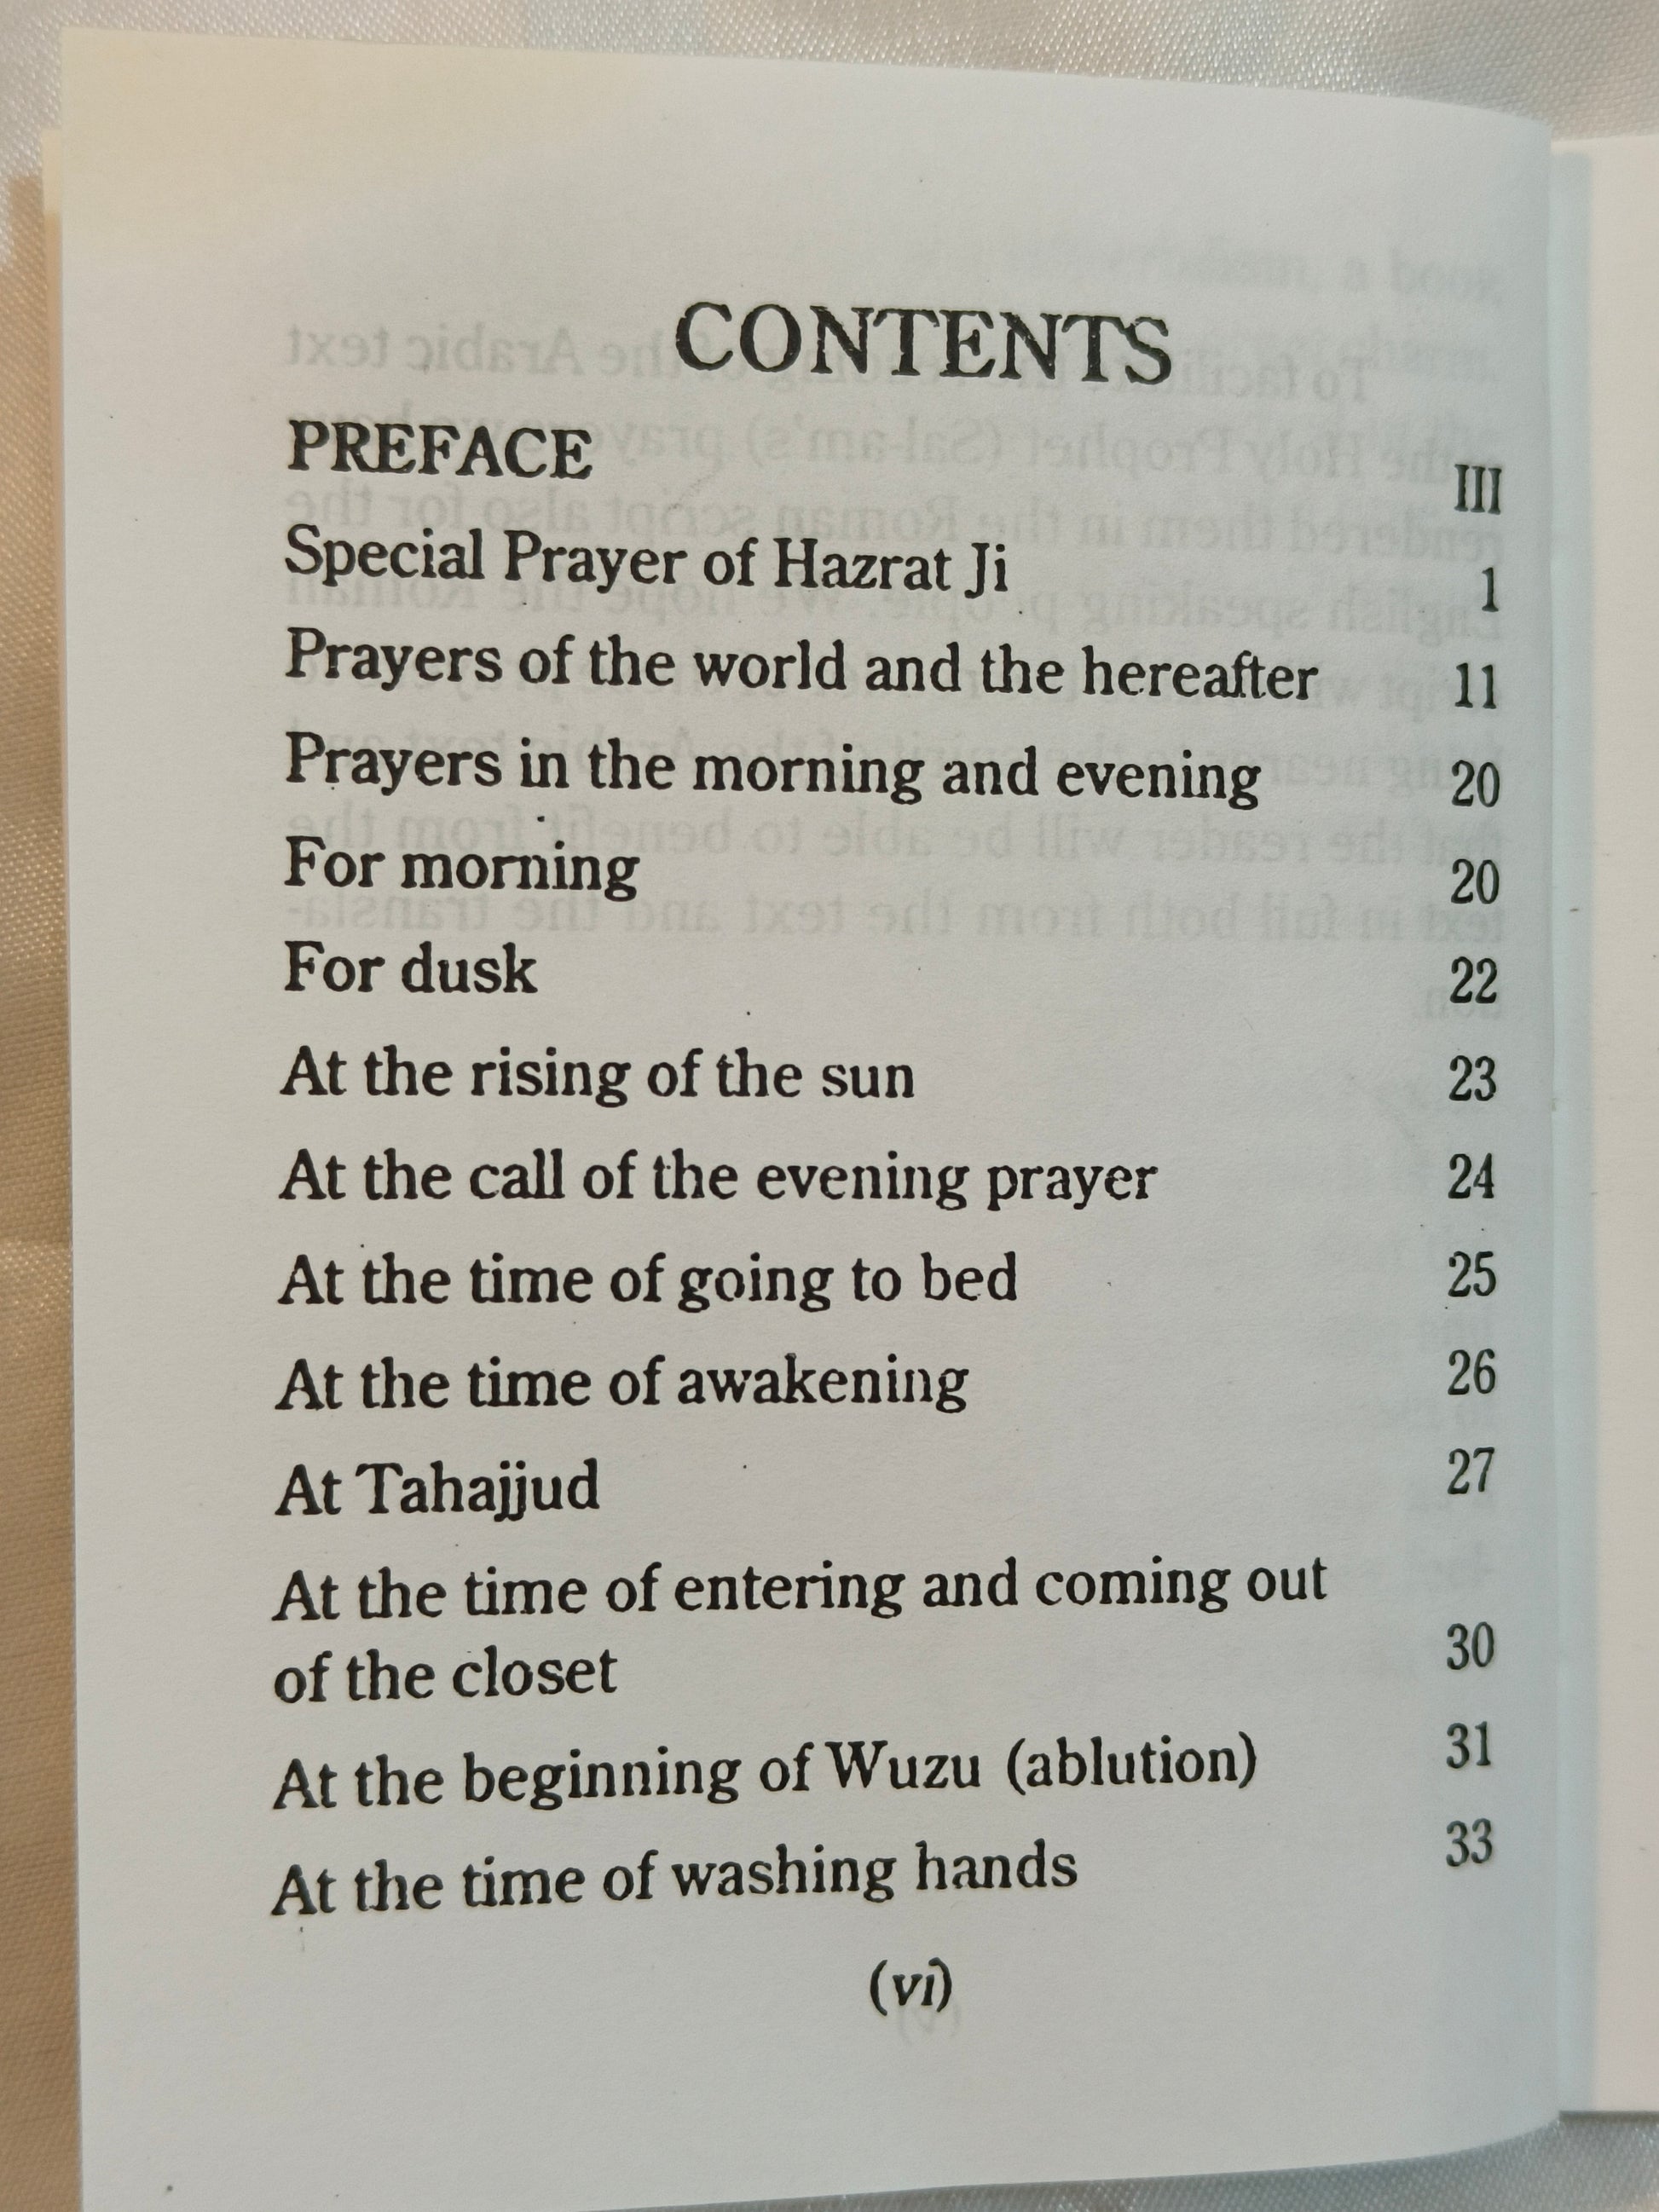 Prayers of the Prophet Mohammed (Masnoon duaain)- Pocket Size - alifthebookstore